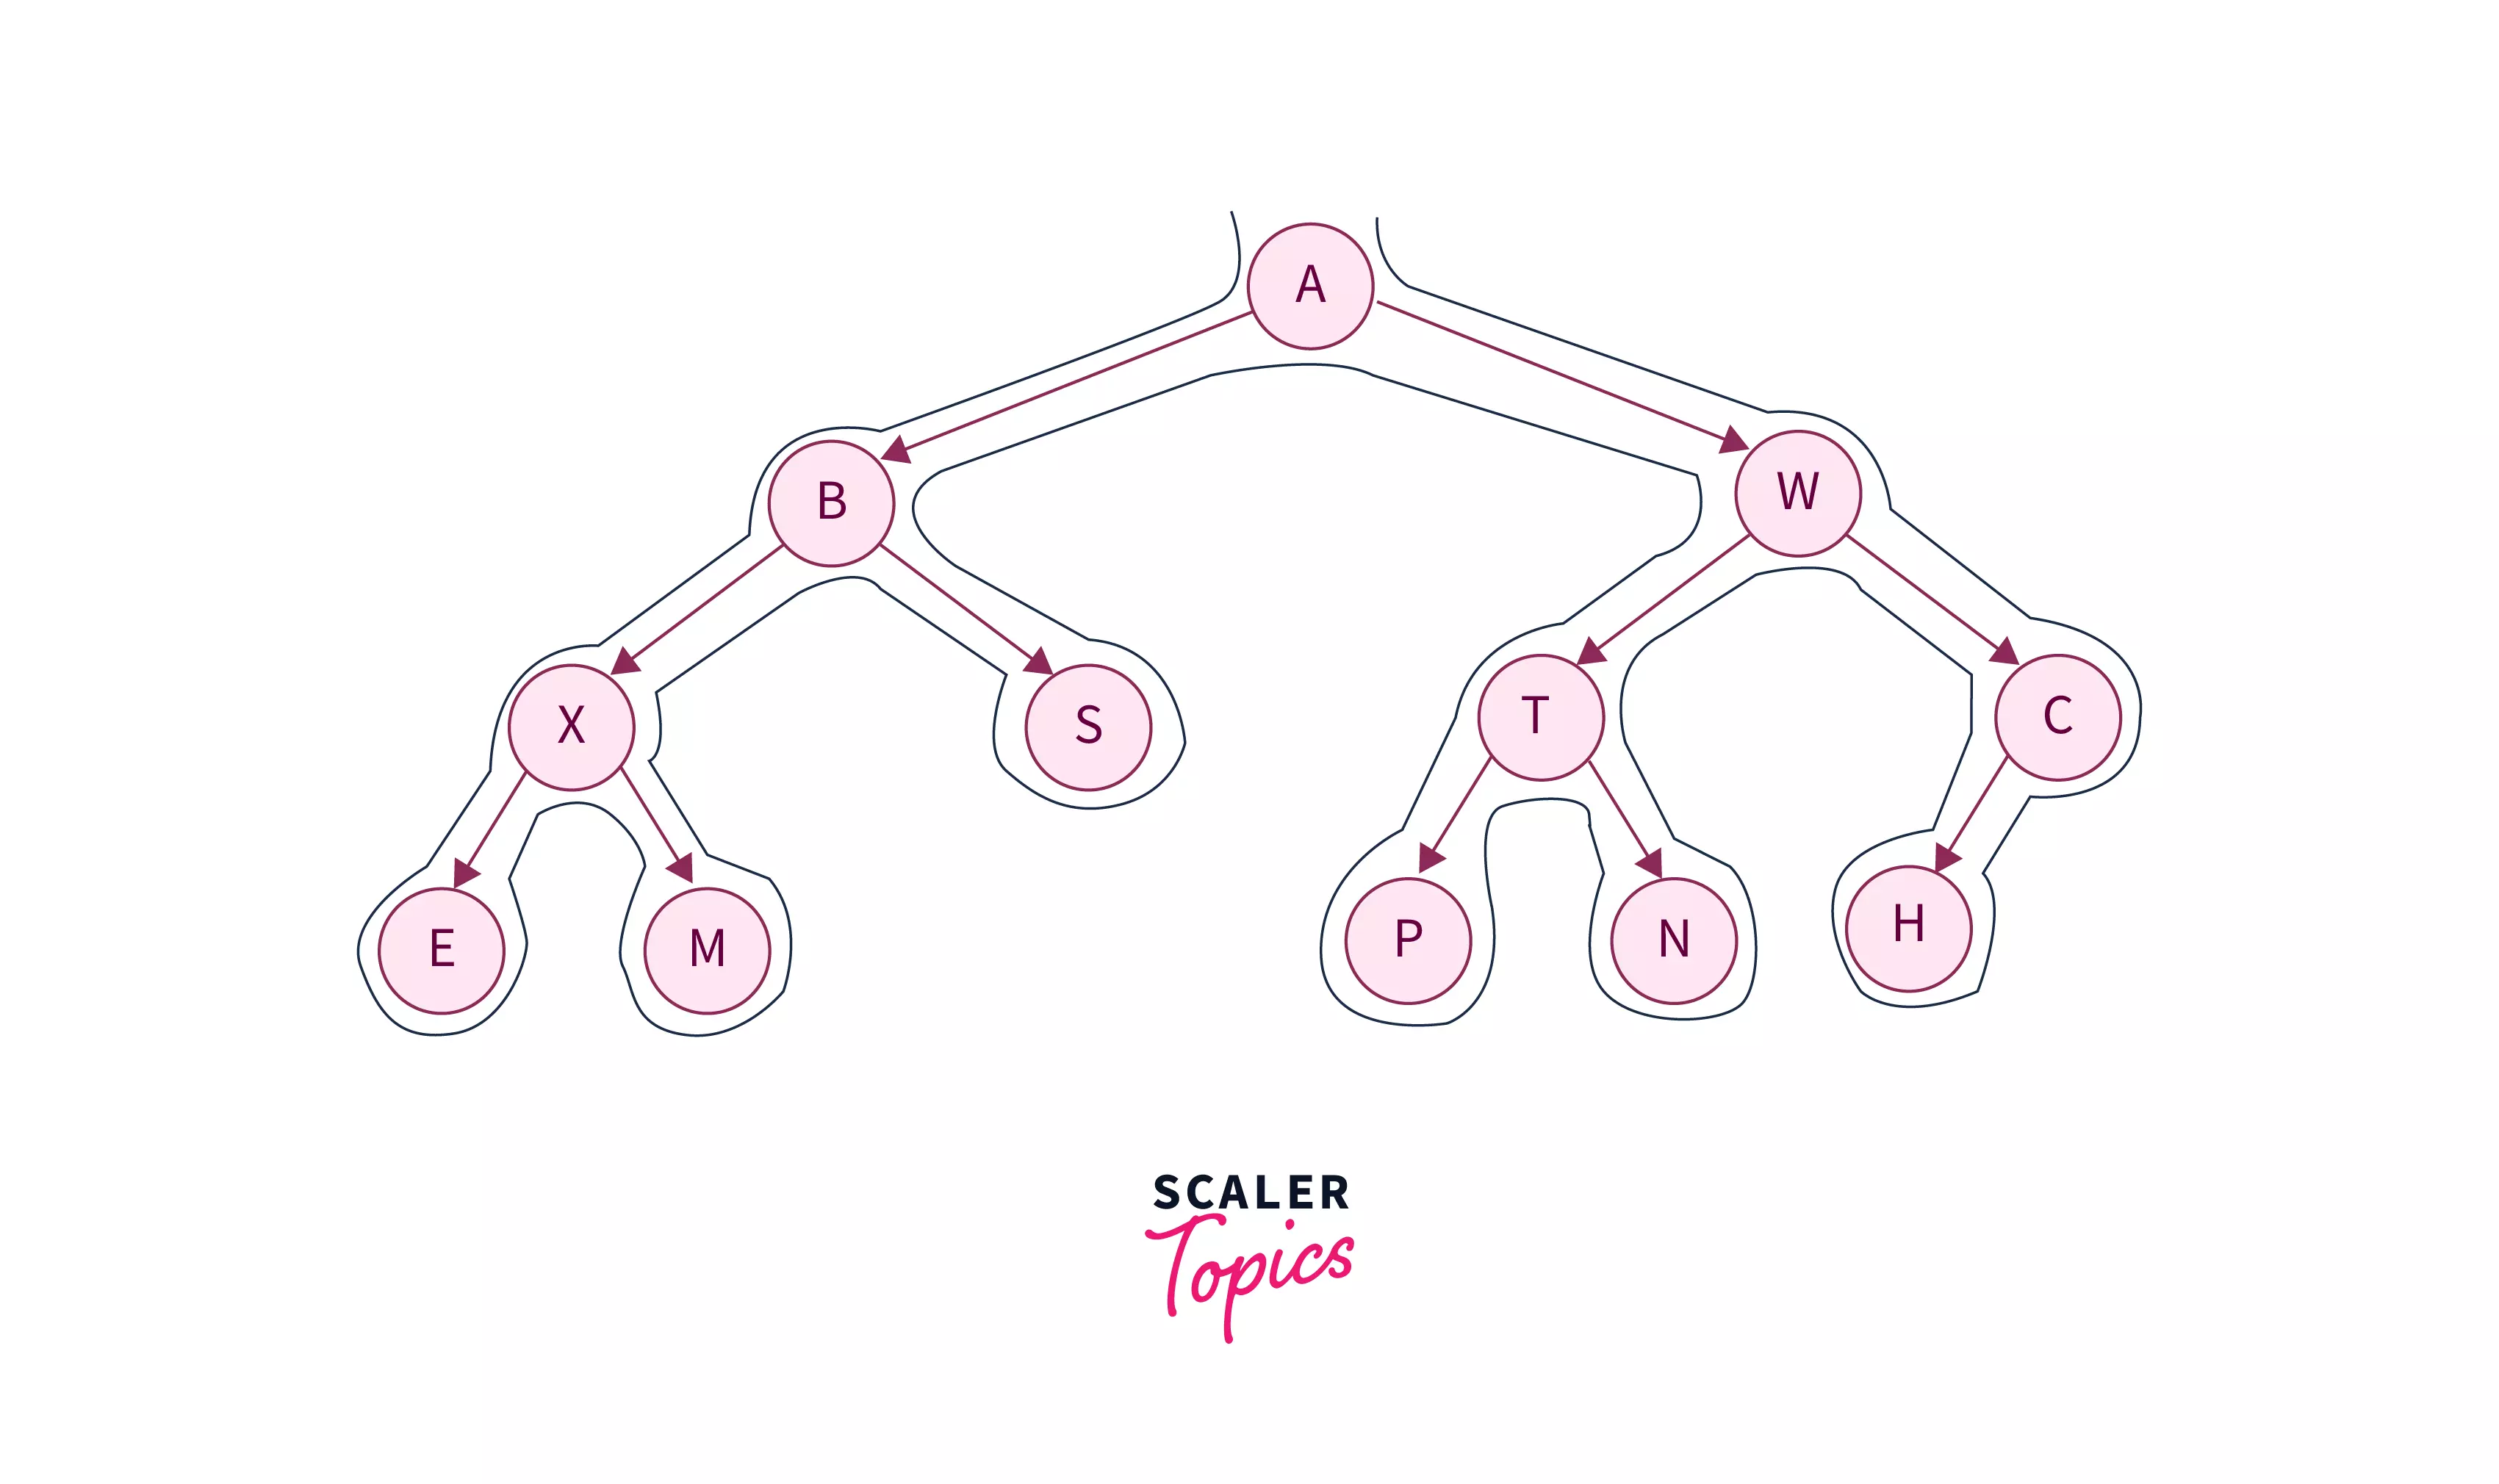 https://scaler.com/topics/images/traversal-of-a-binary-tree.webp